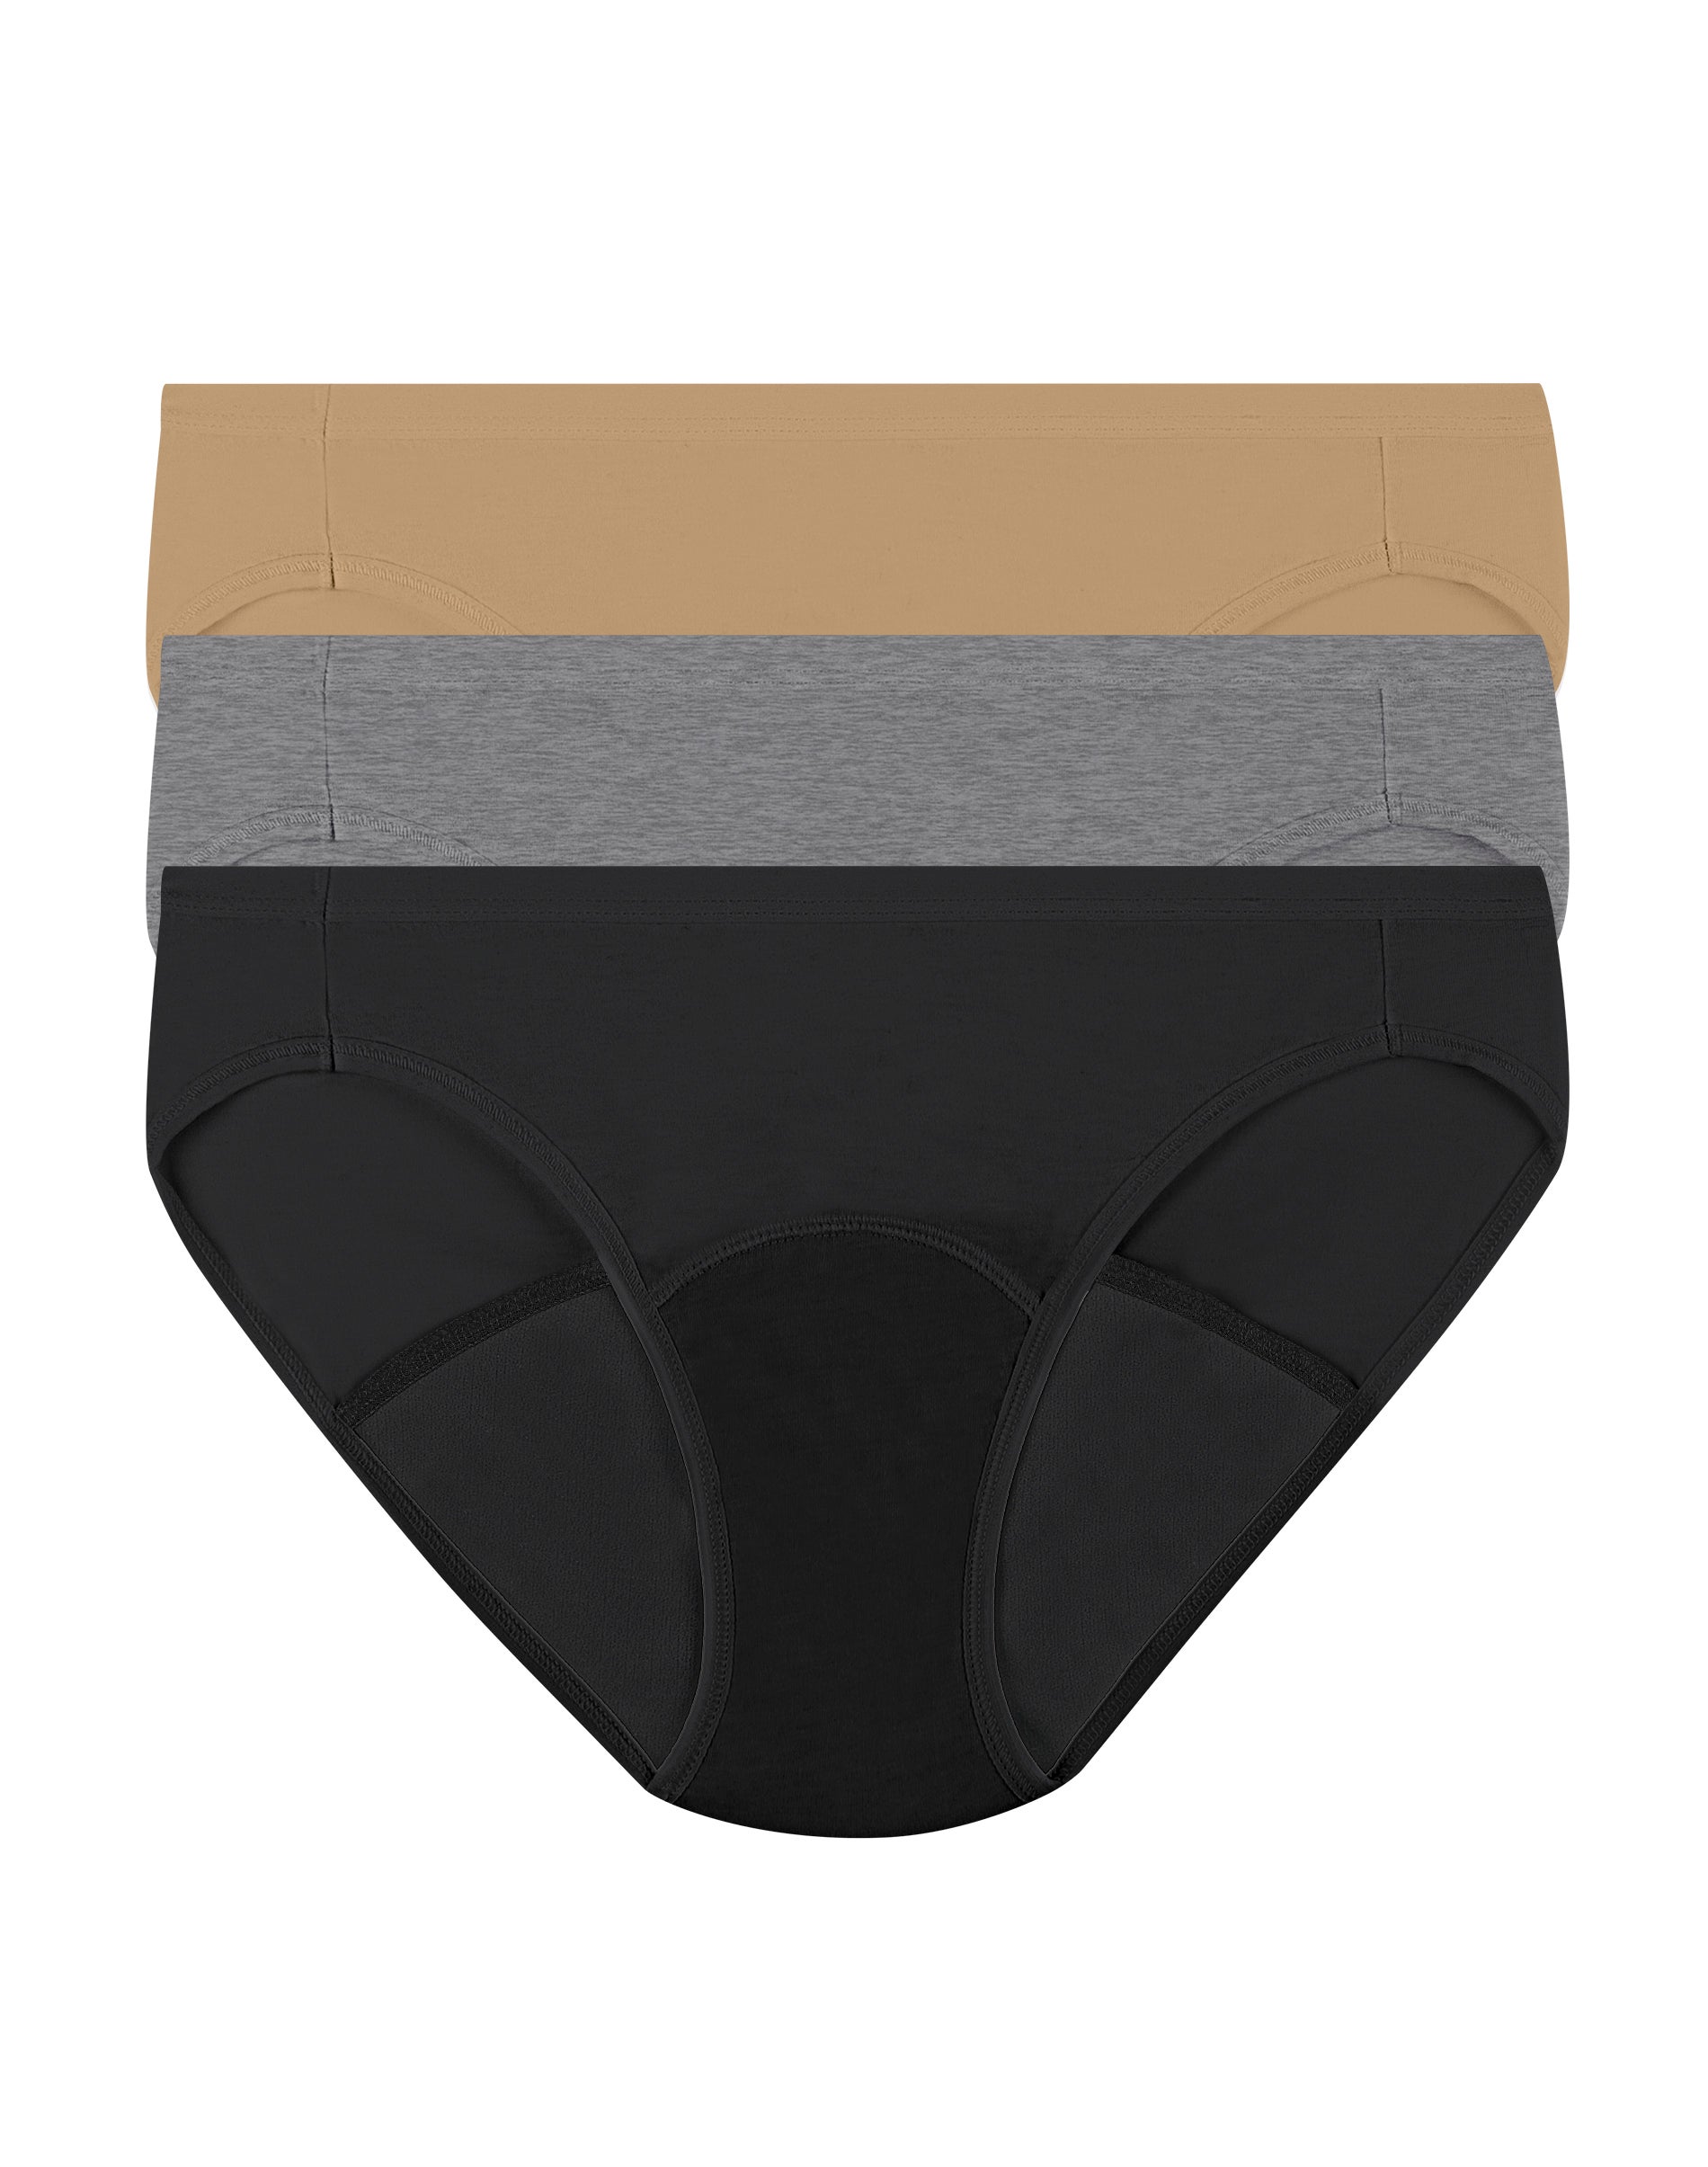 Hanes Comfort, Period. Women's Brief Underwear, Light Leaks, Black, 3-Pack  6 